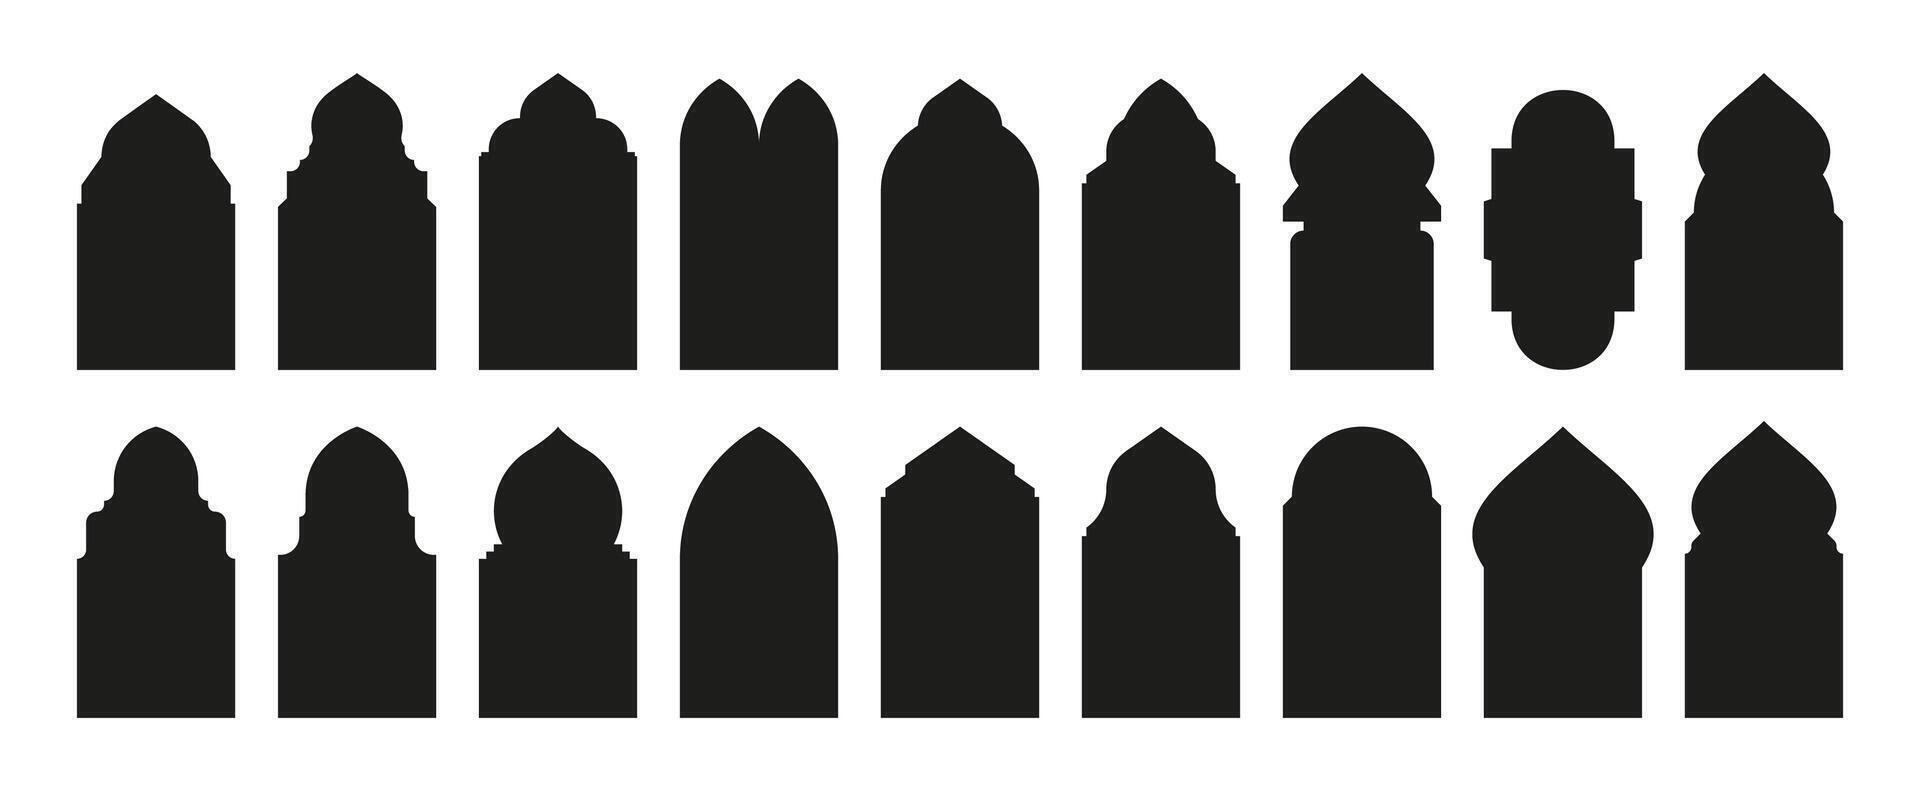 oriental janelas. tradicional islâmico arcos boho minimalista projeto, árabe geométrico quadros com mesquita cúpula silhueta. moderno vetor conjunto